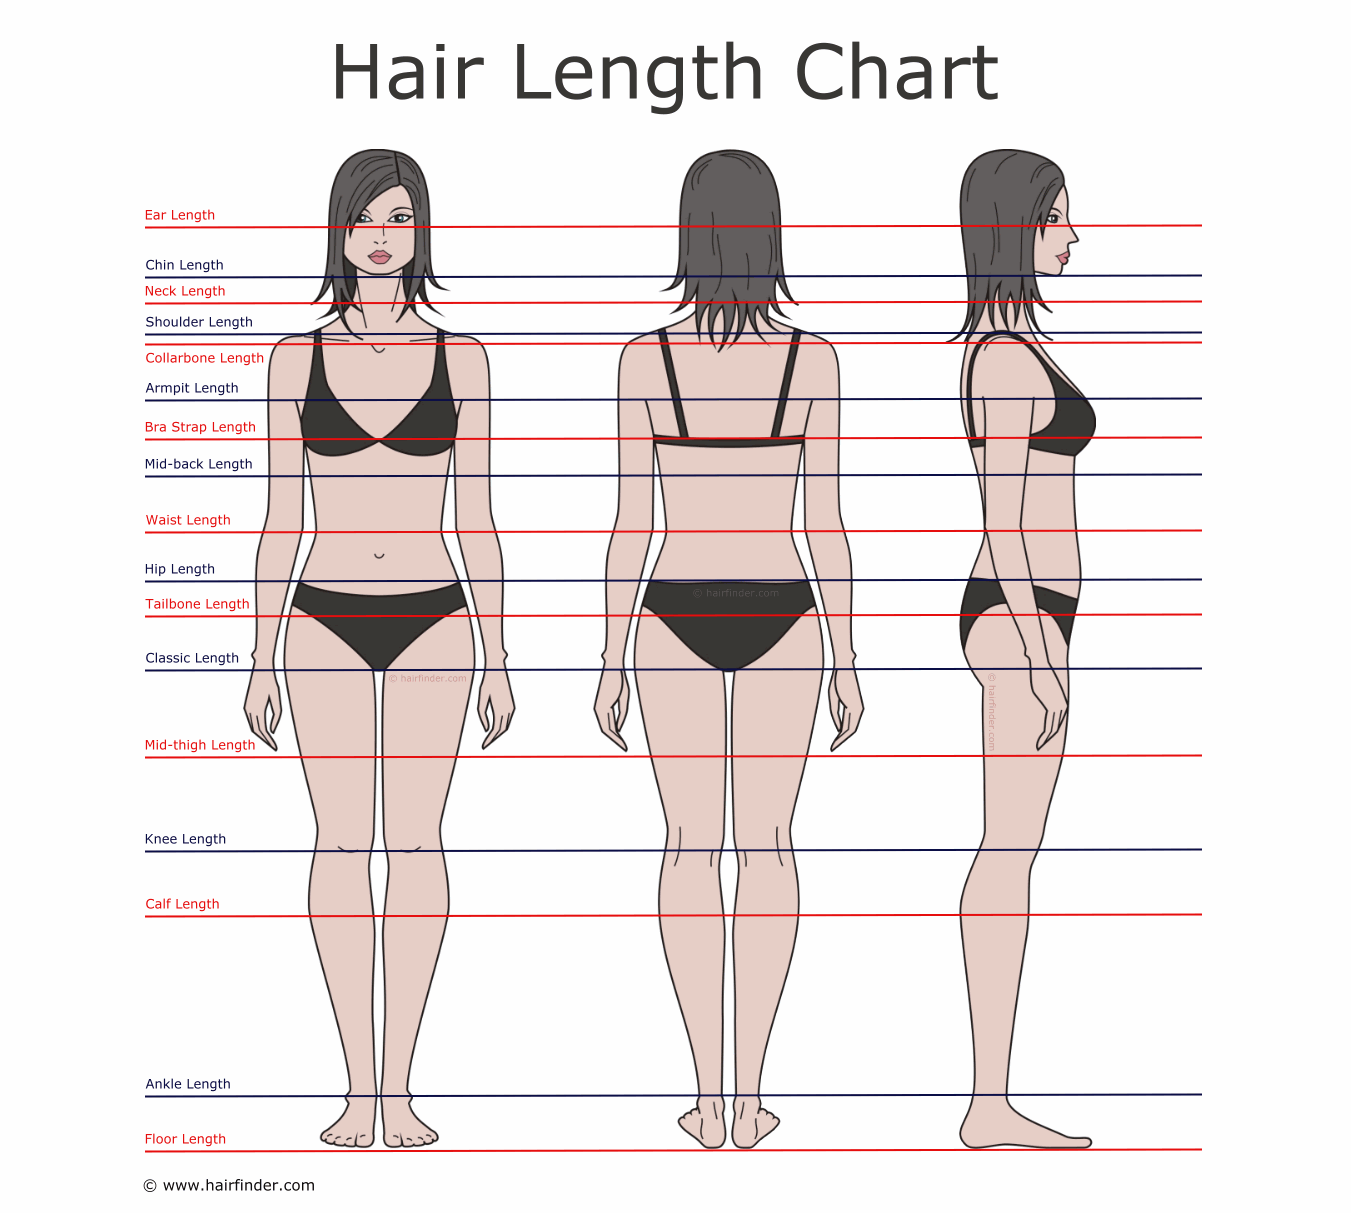 https://www.hairfinder.com/info/hair-length-chart.gif